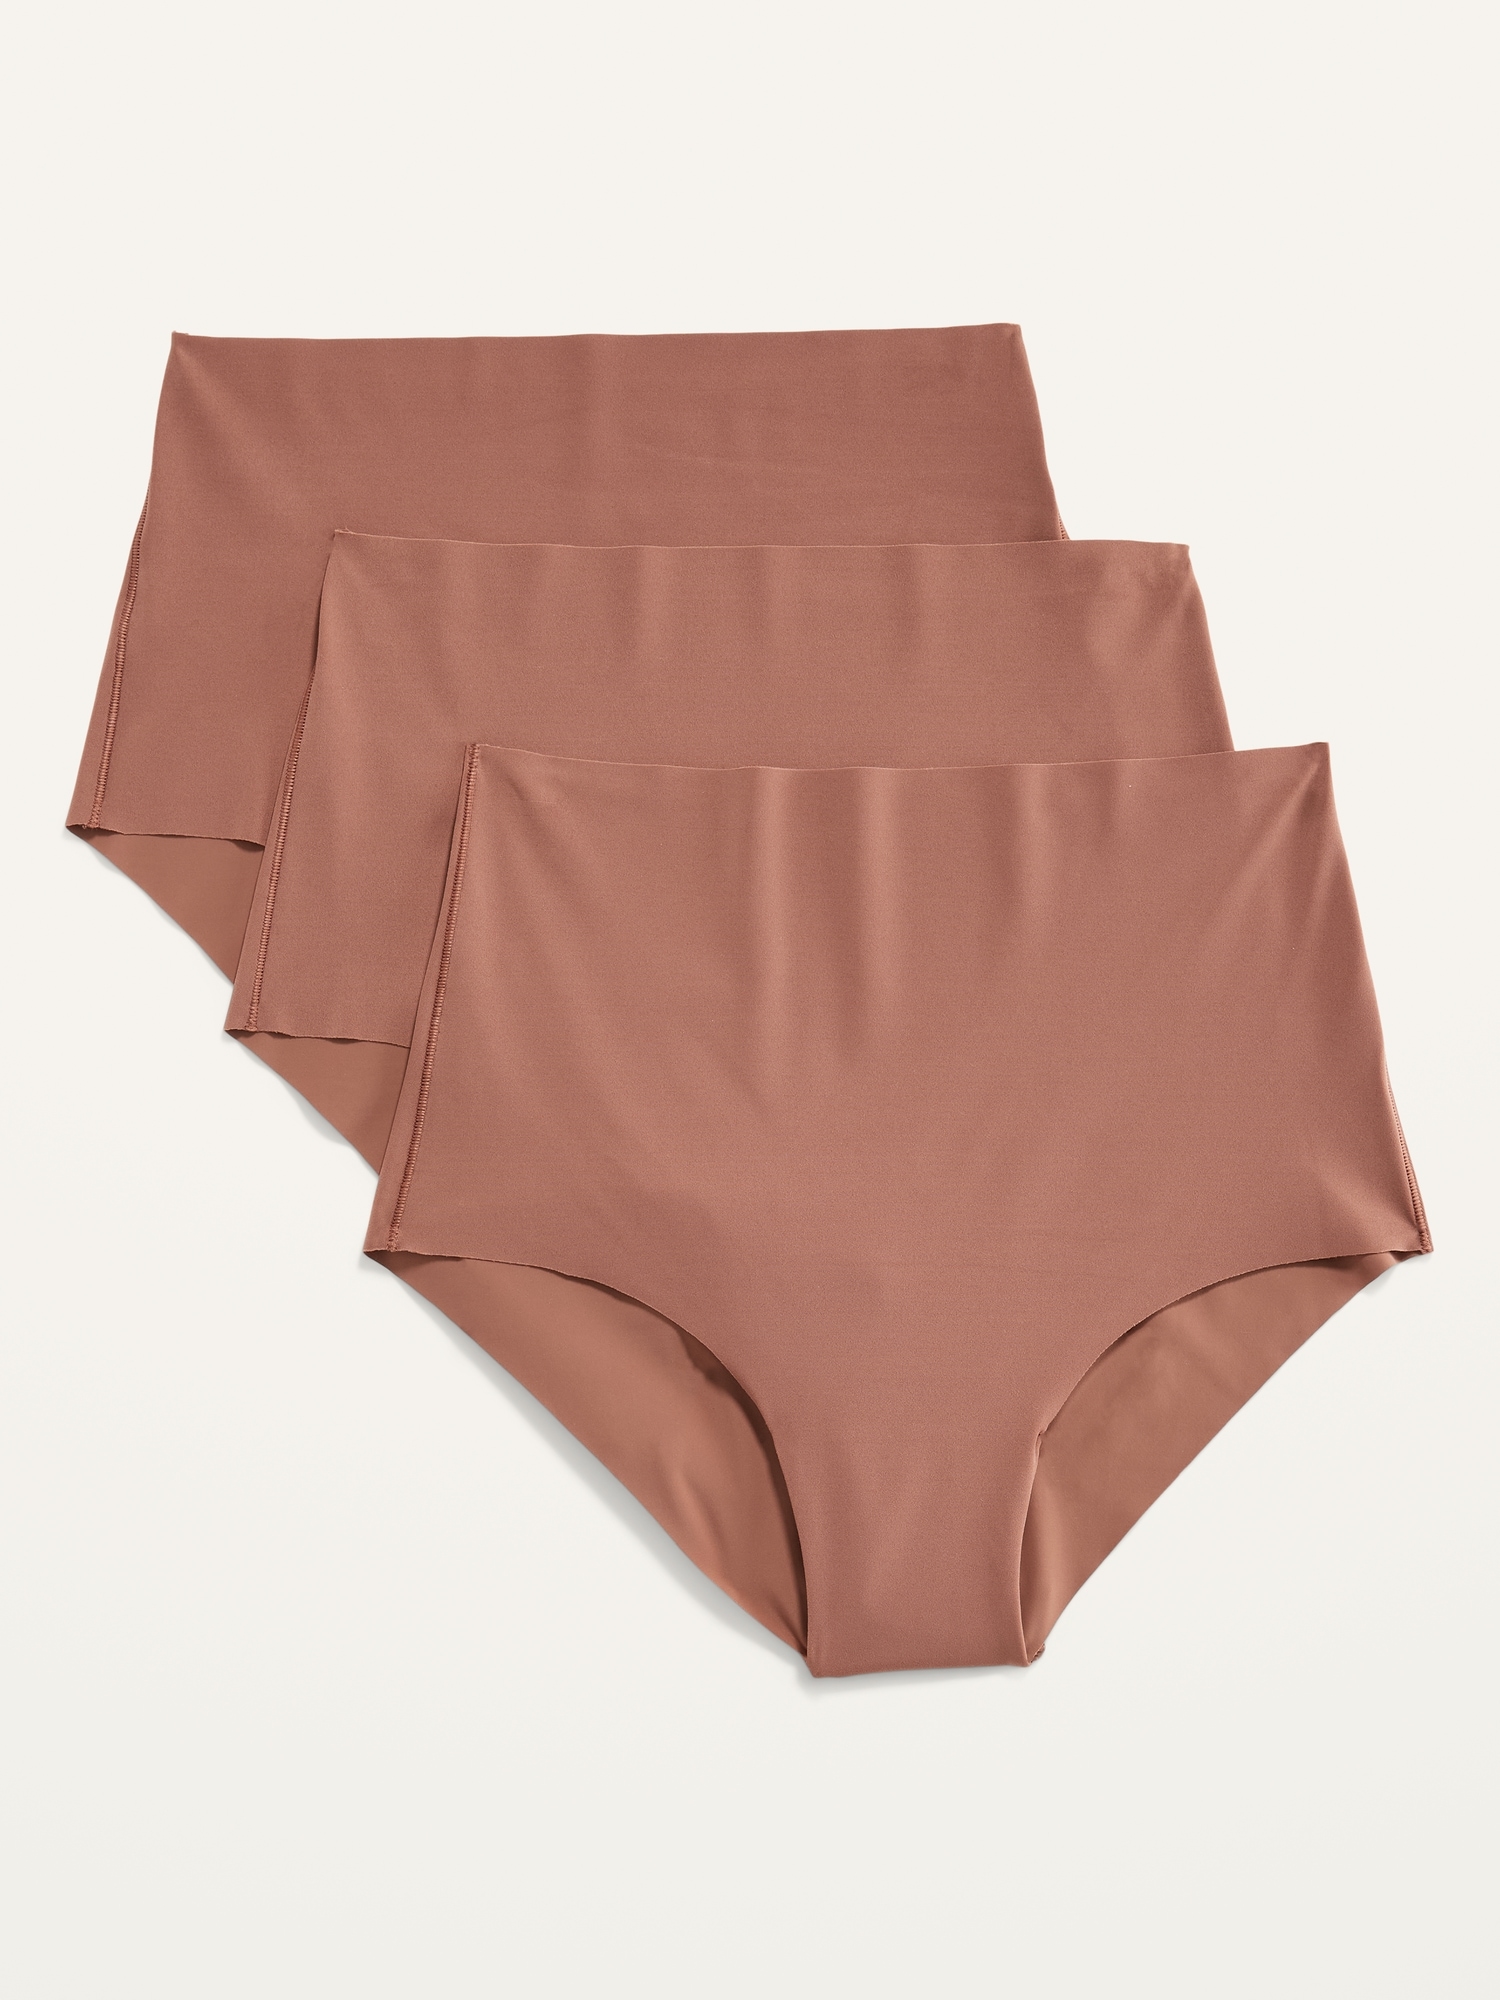 Women's Seamless Hipster Underwear navy dip dye size L (12-14) - Auden nwt  panty